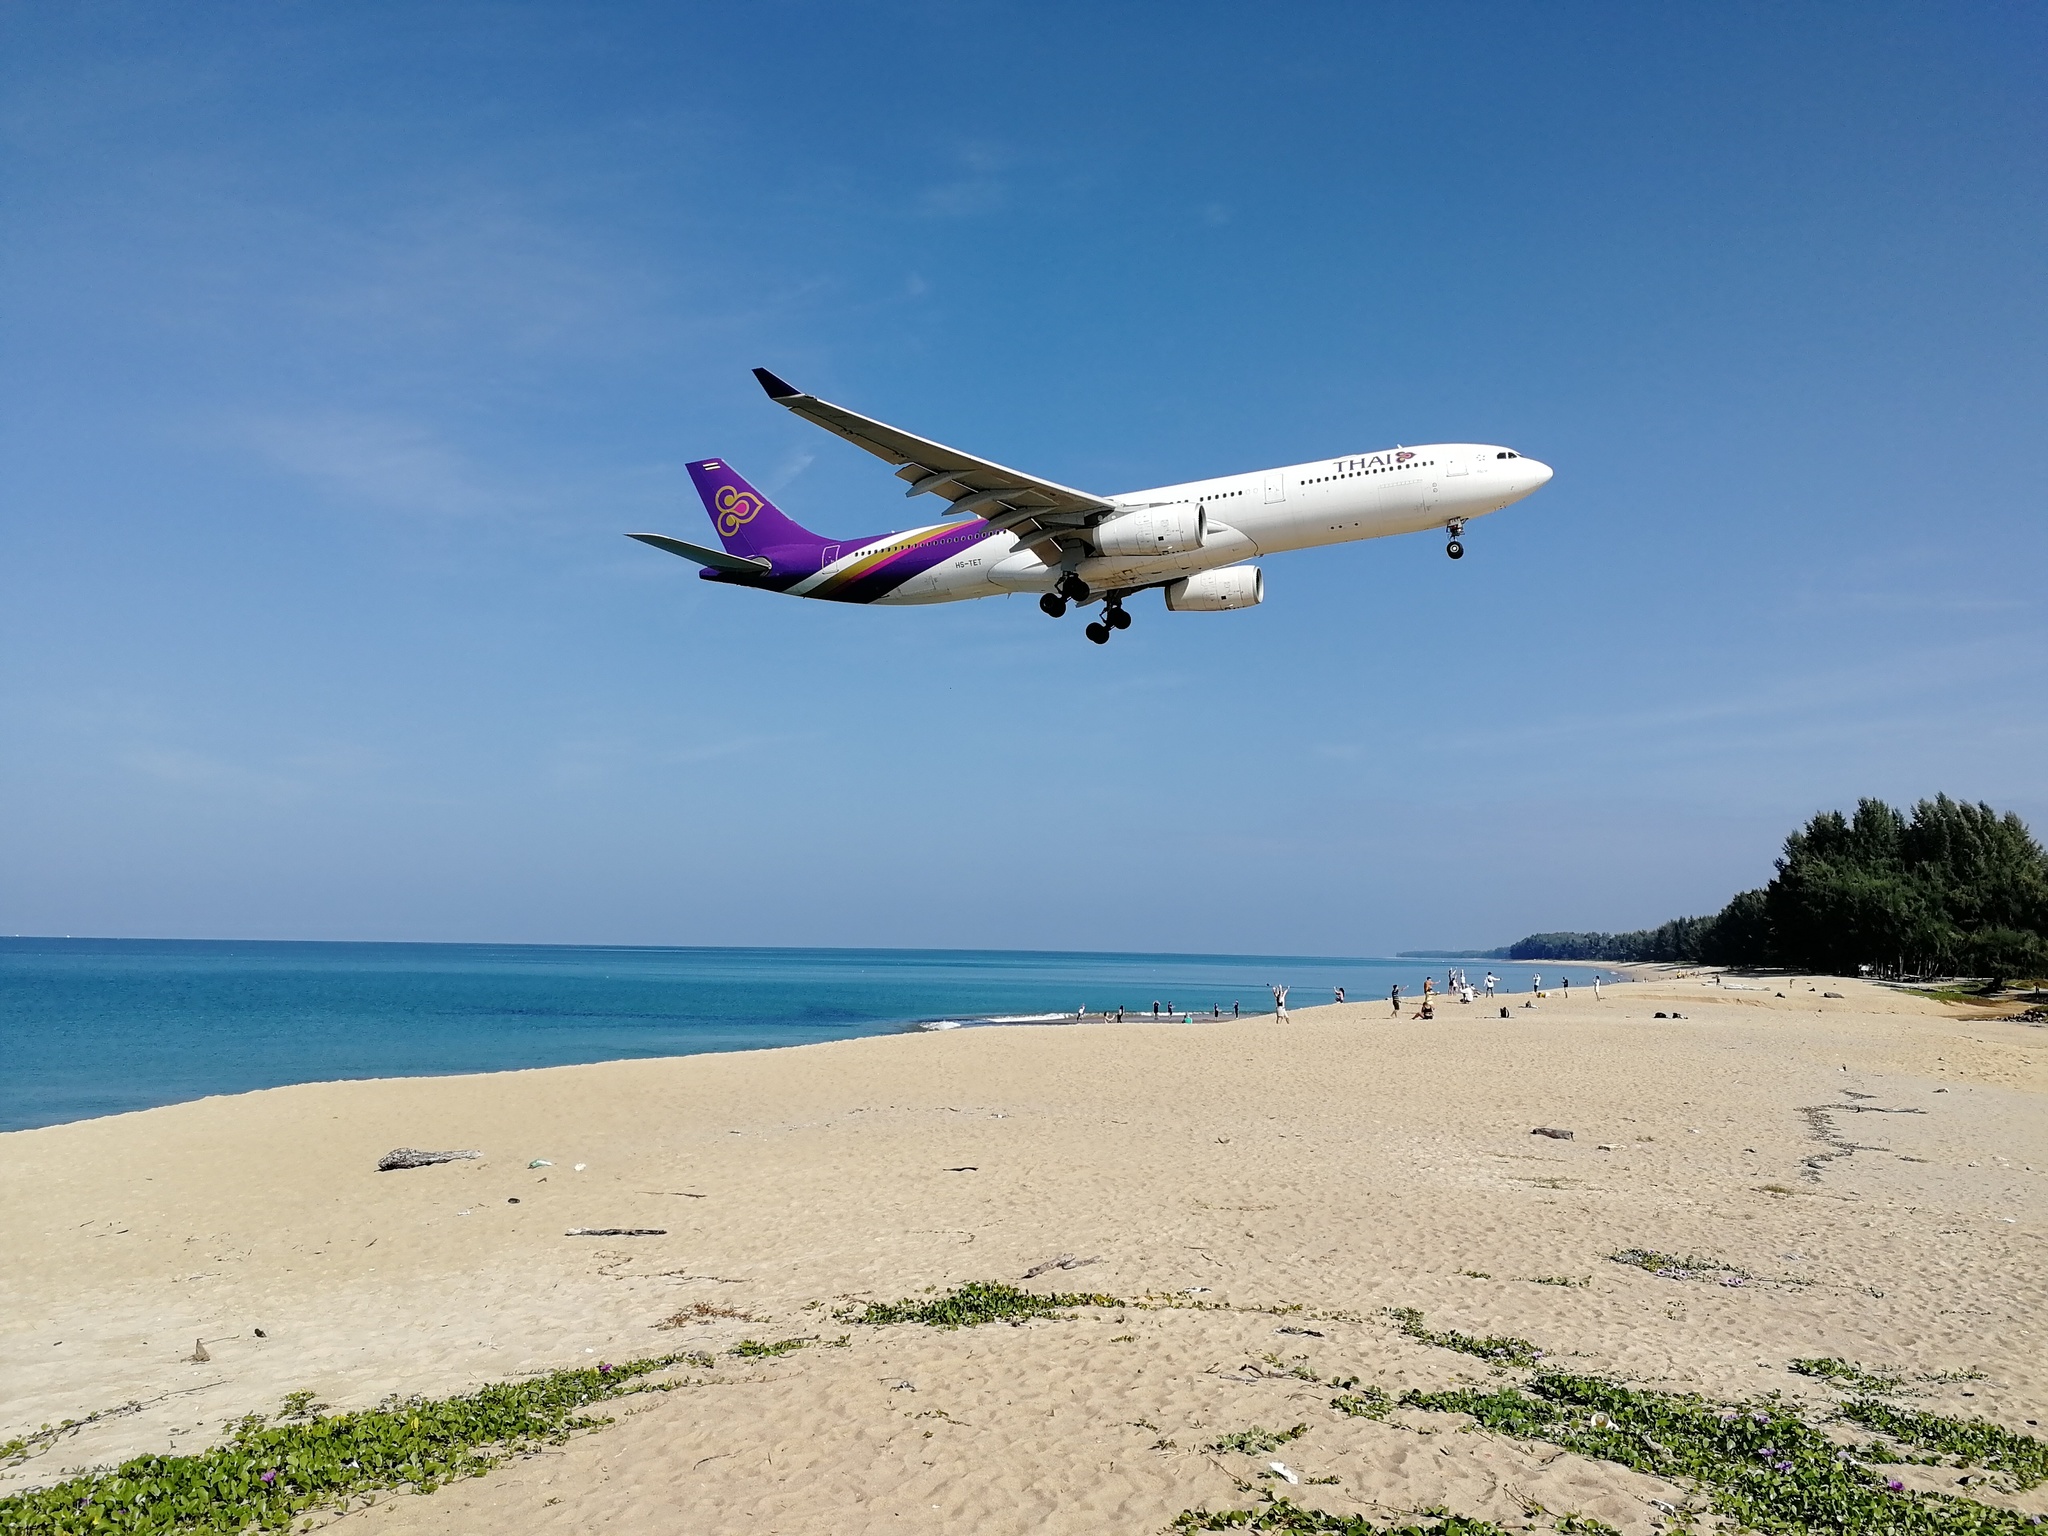 Tai, the beach, the plane... - My, Spotting, Airplane, Beach, Phuket, Longpost, The photo